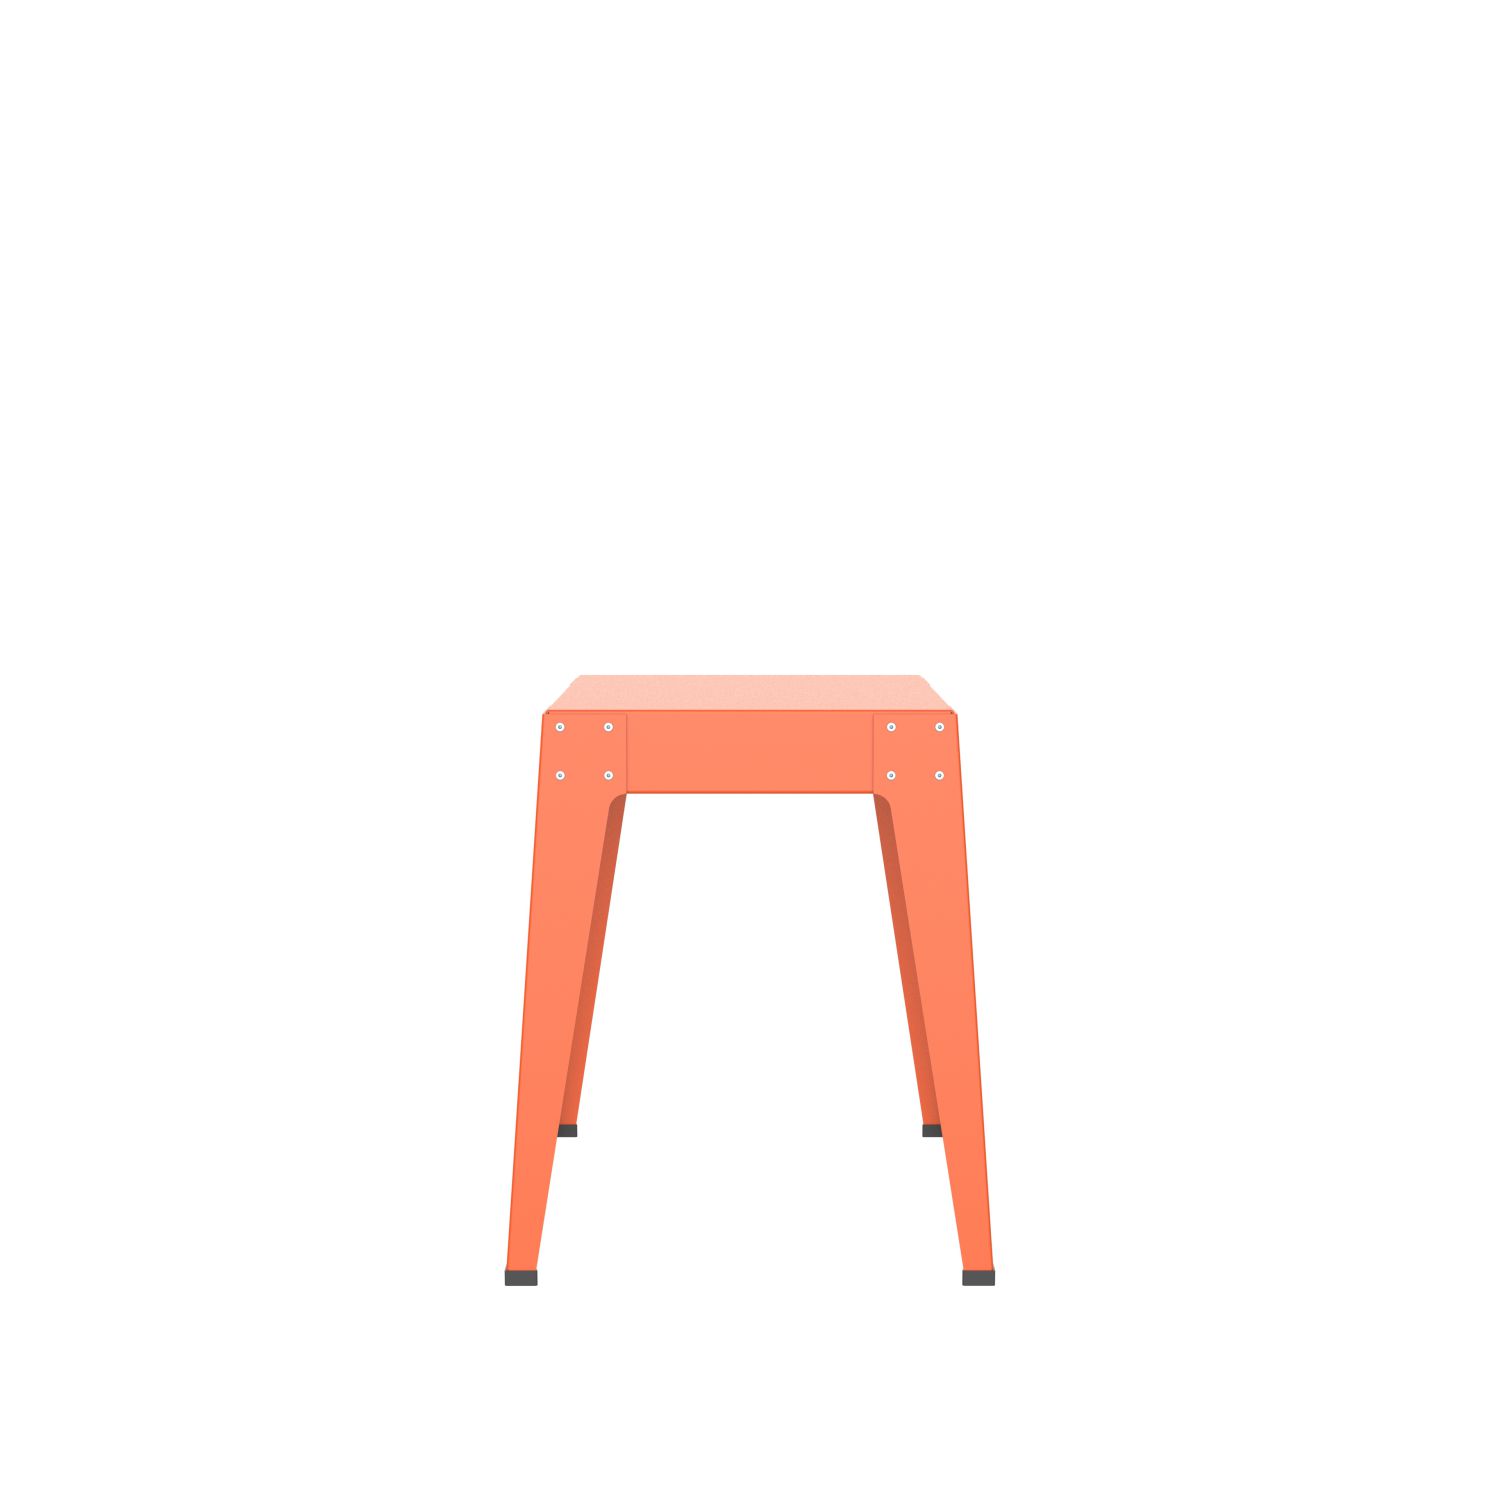 lensvelt piet hein eek aluminium series stool pure orange ral2004 hard leg ends